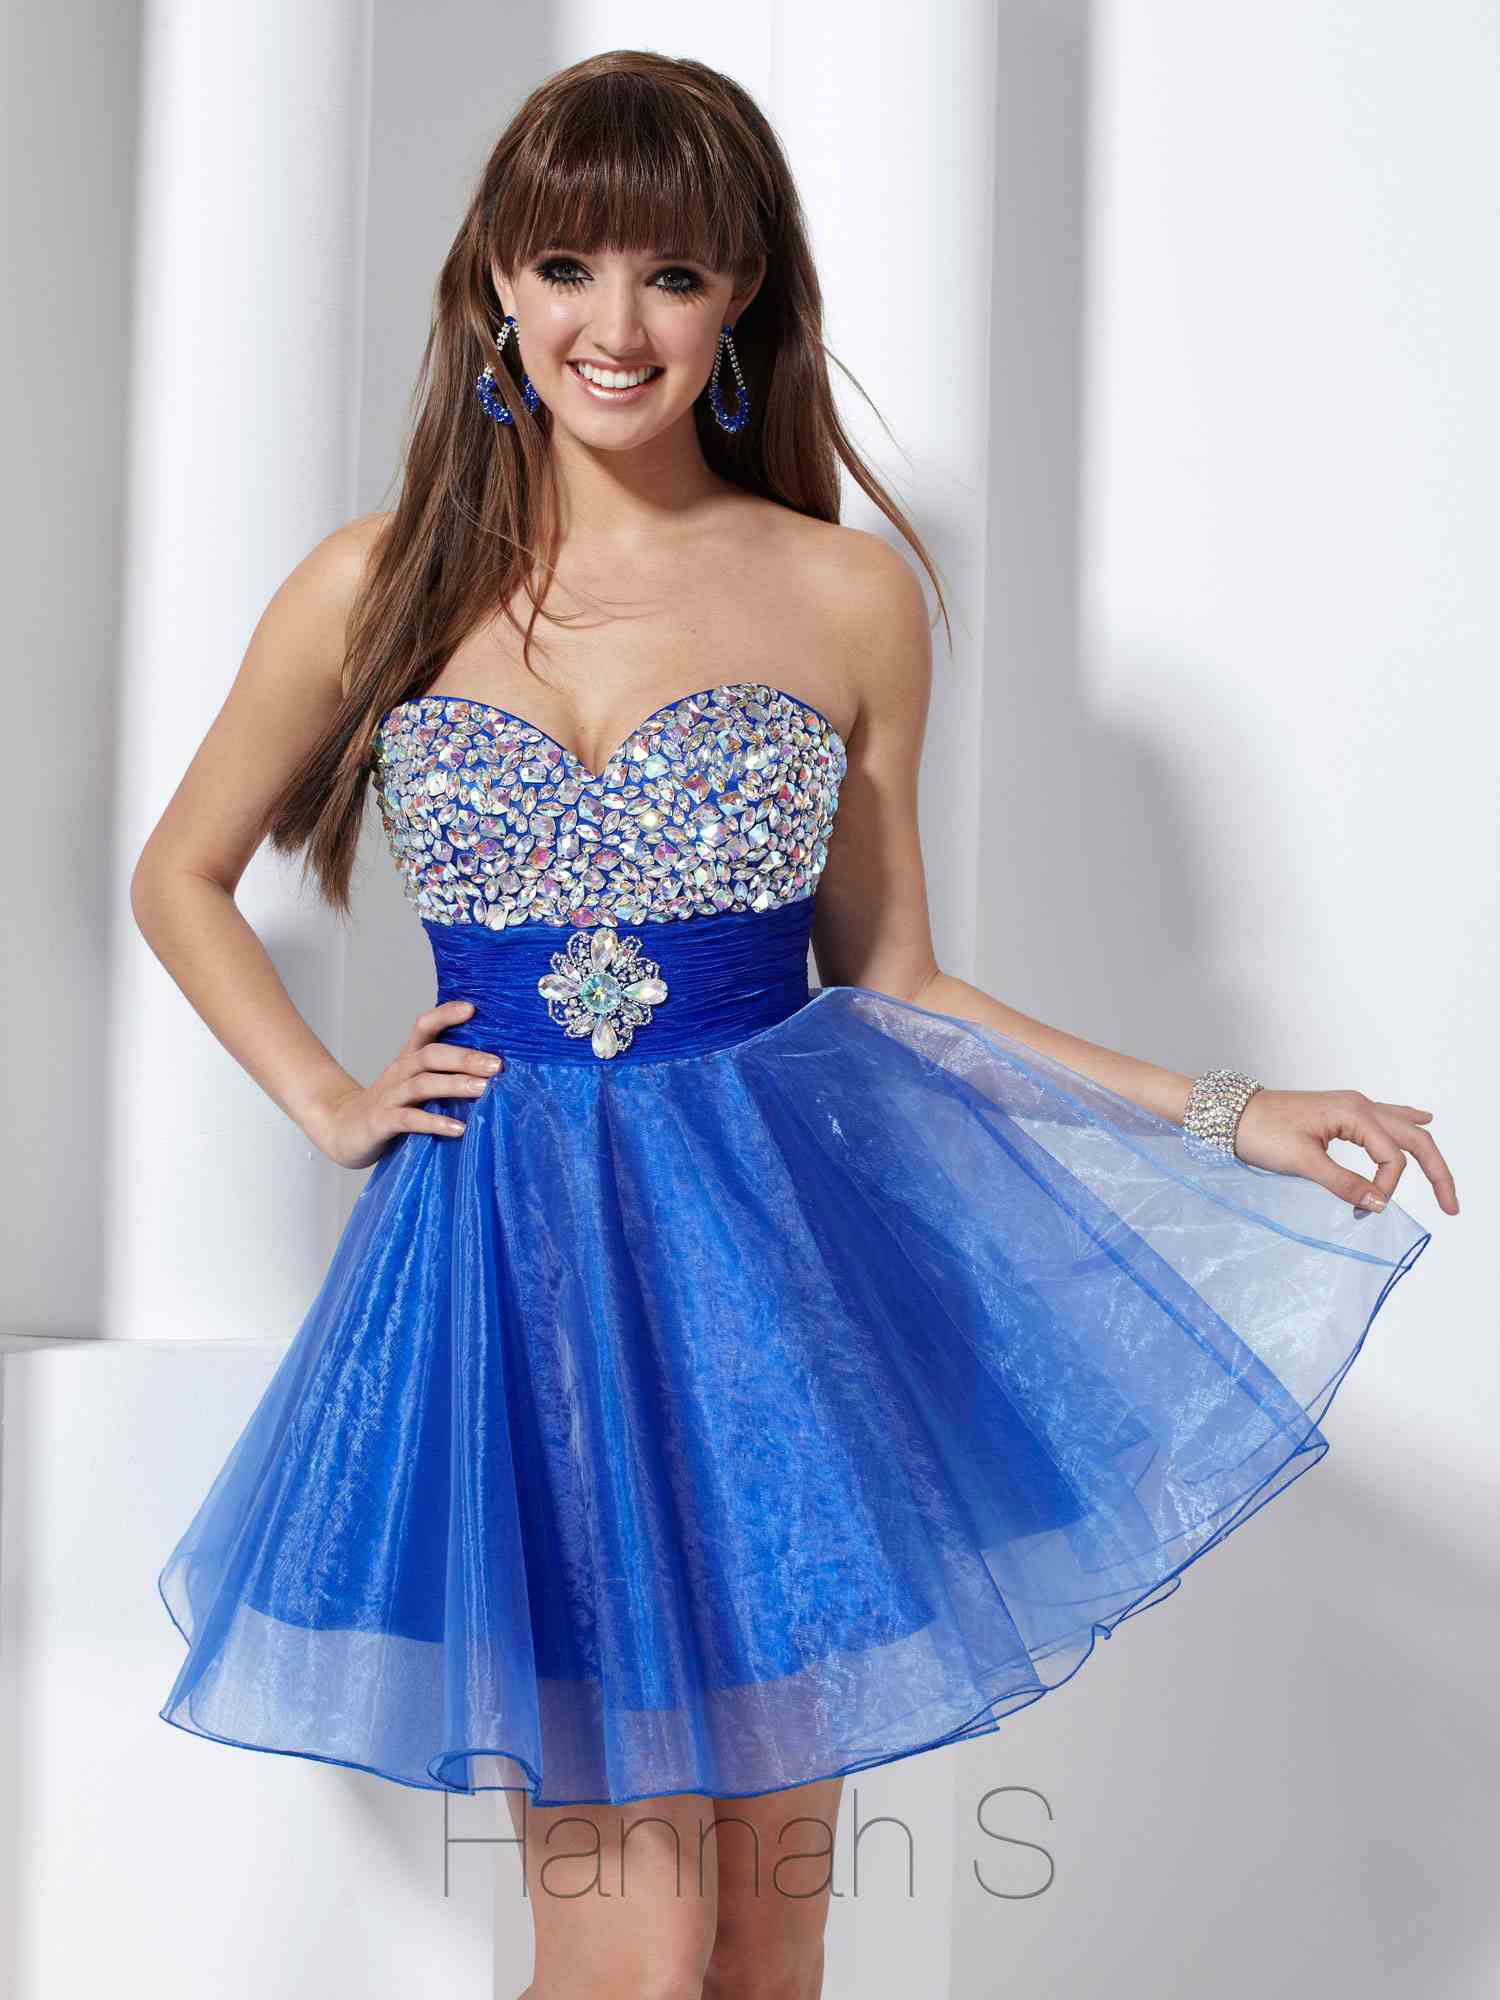 Hannah S 27750 Prom Dress